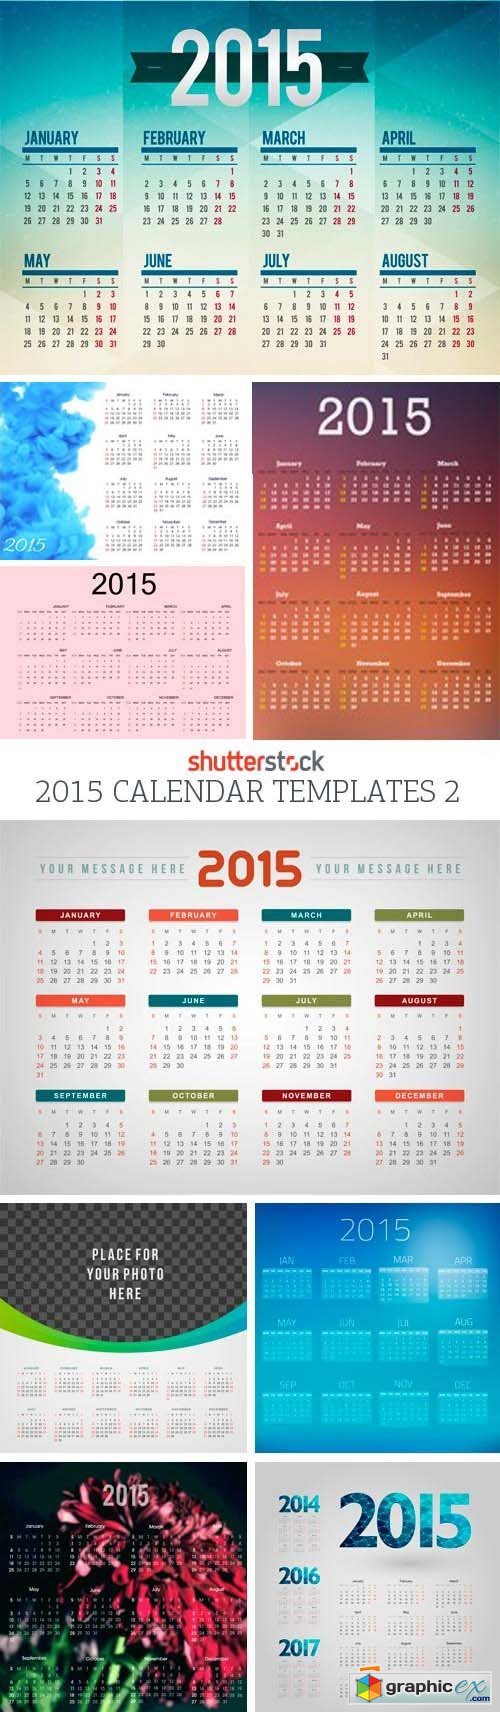 Amazing SS - 2015 Calendar Templates 2, 25xEPS